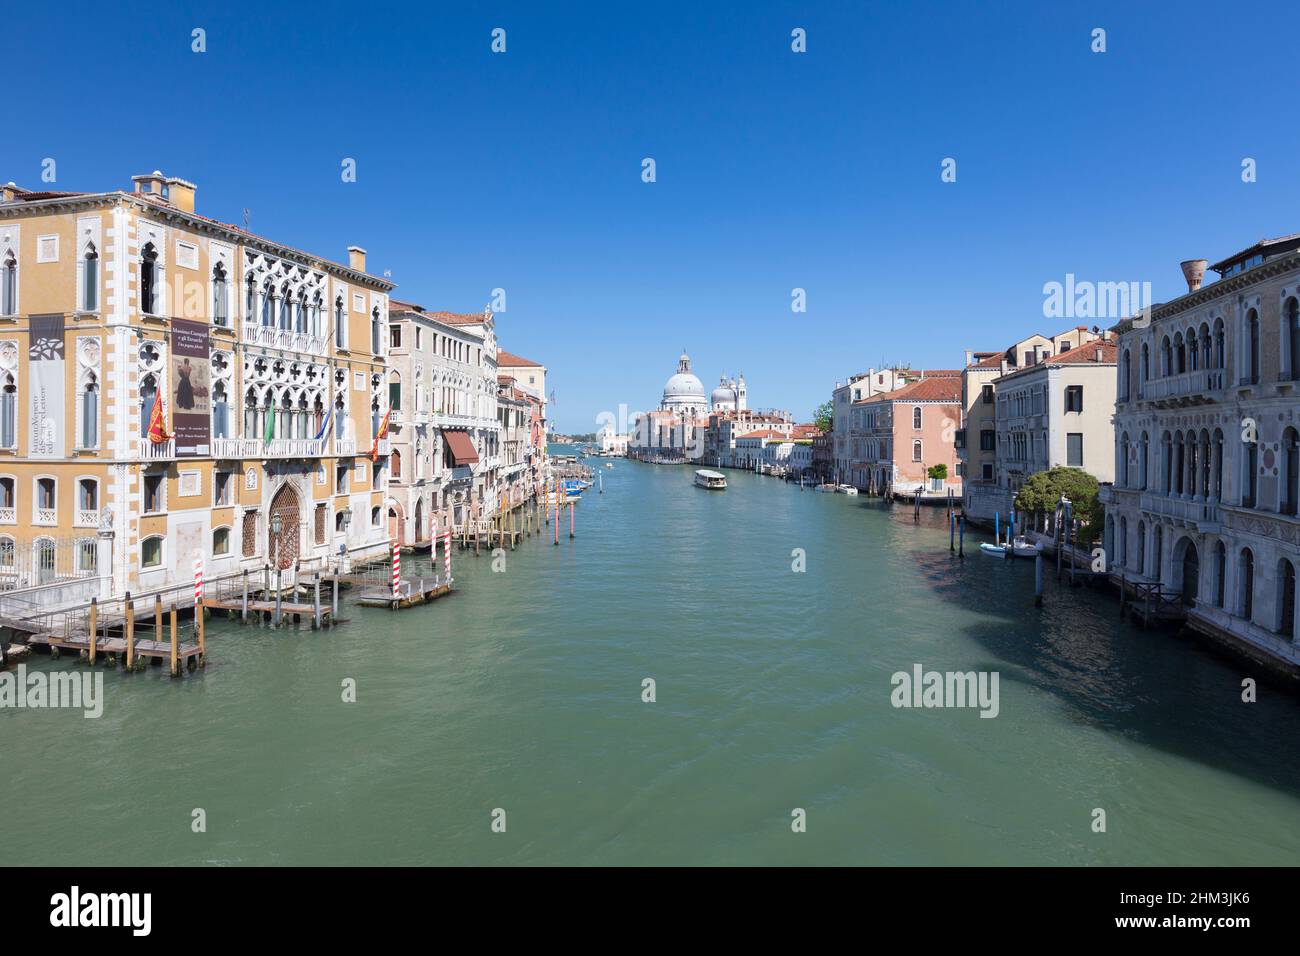 View of Venice with the Grand Canal and Basilica Santa Maria della Salute, Venice, Italy Stock Photo